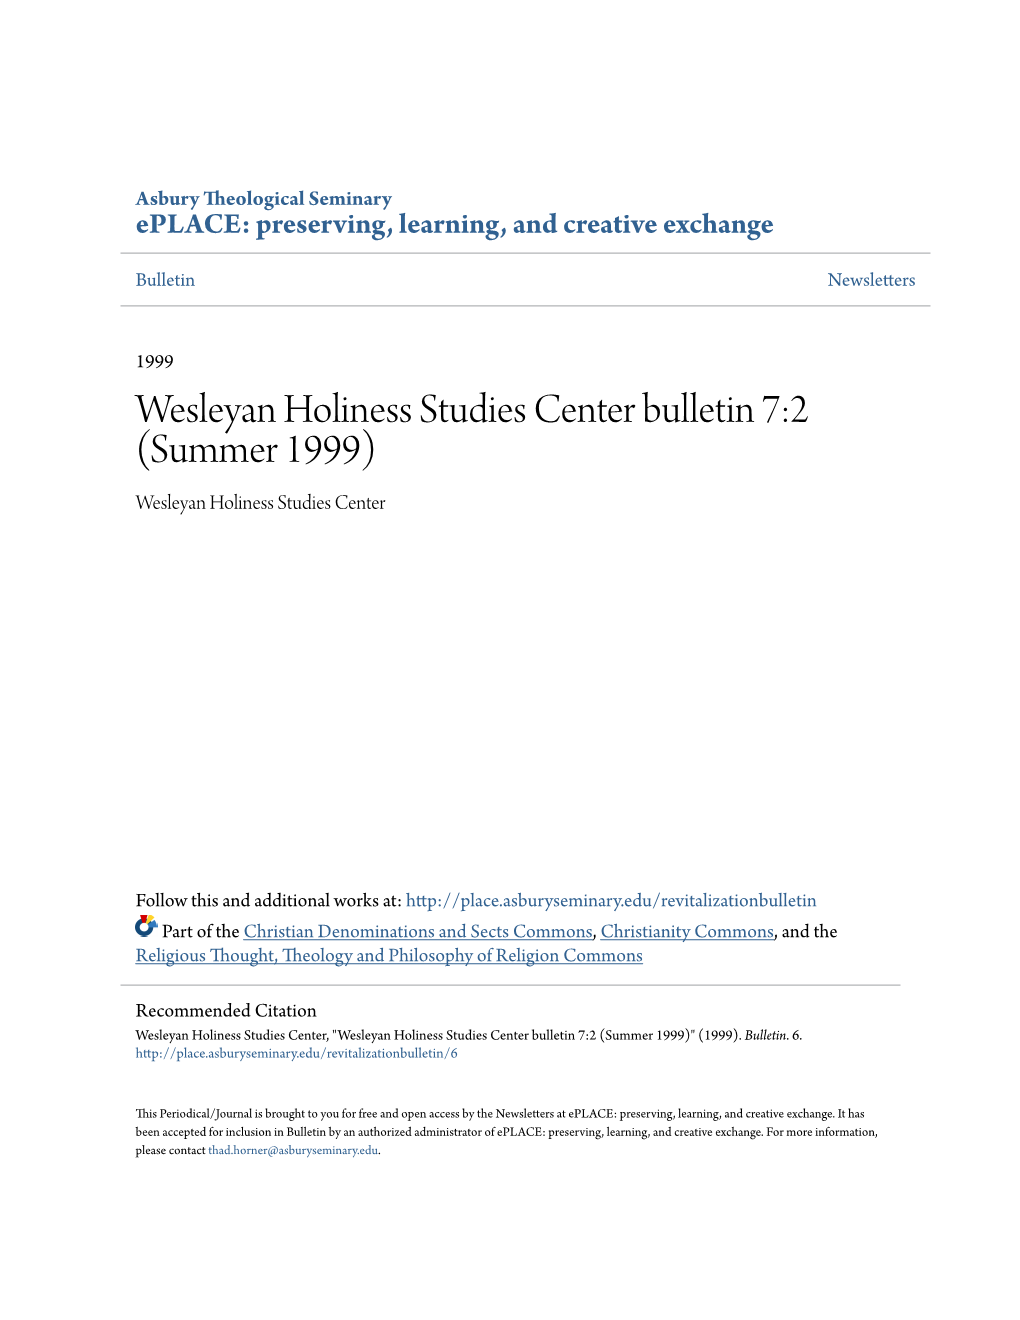 Wesleyan Holiness Studies Center Bulletin 7:2 (Summer 1999) Wesleyan Holiness Studies Center